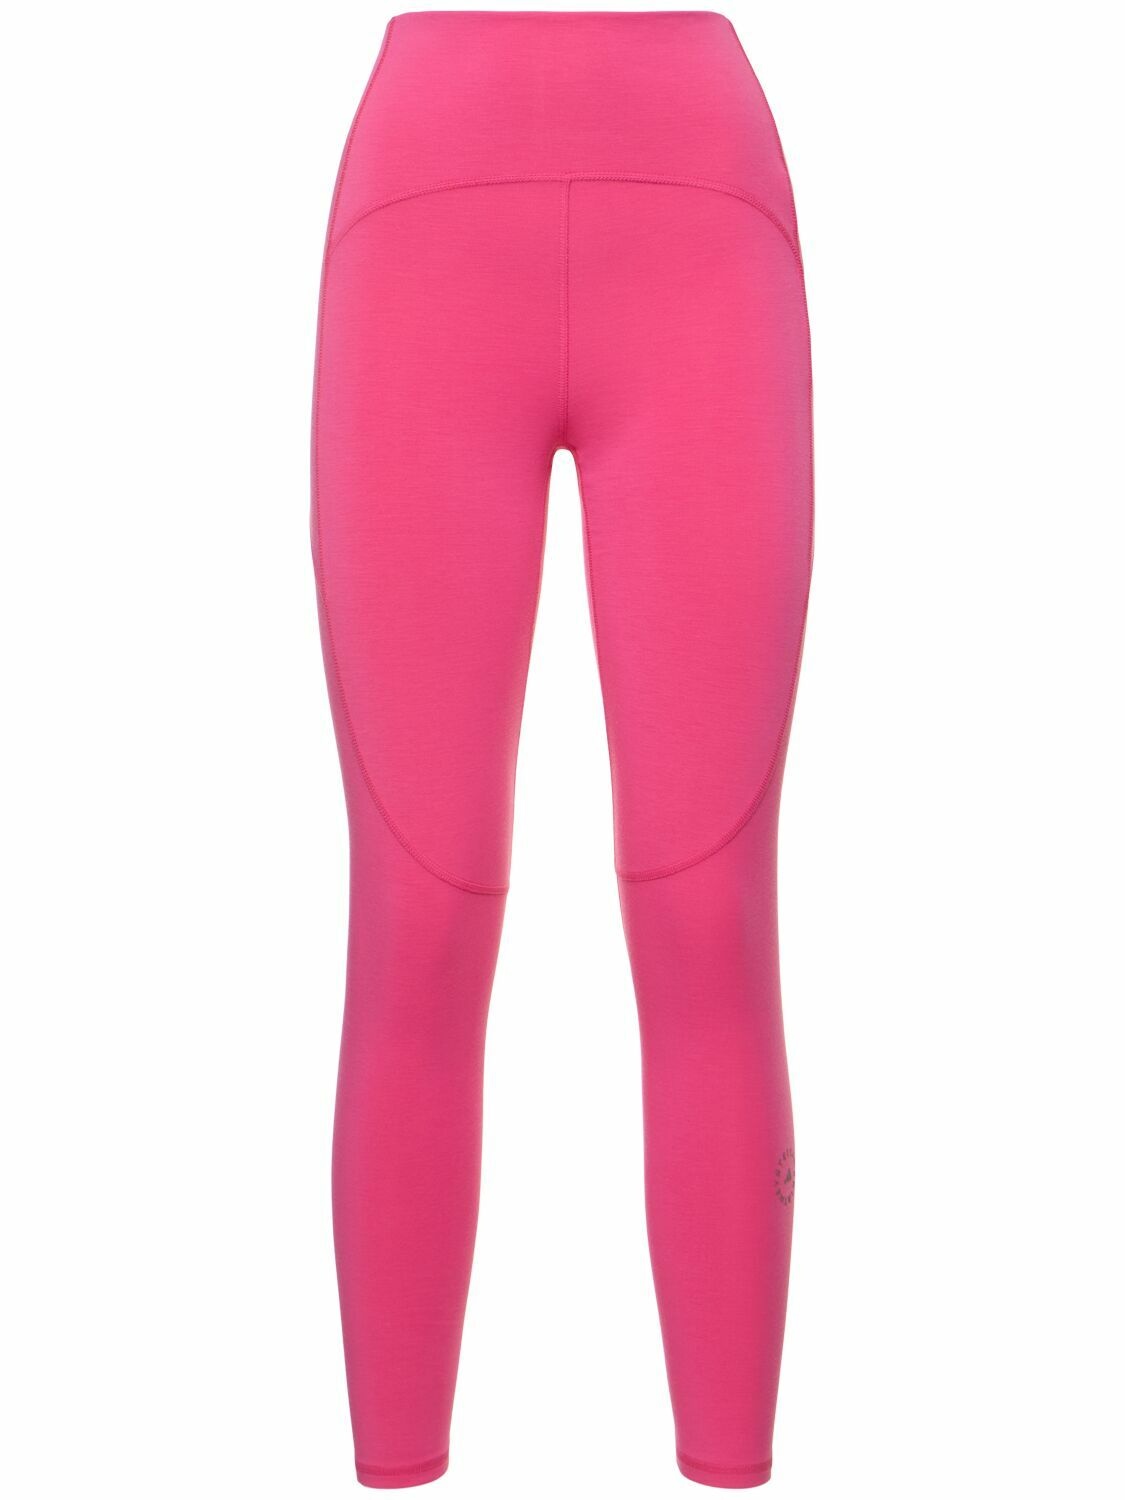 Stella McCartney x Adidas Black/Pink Perforated Knit Leggings L